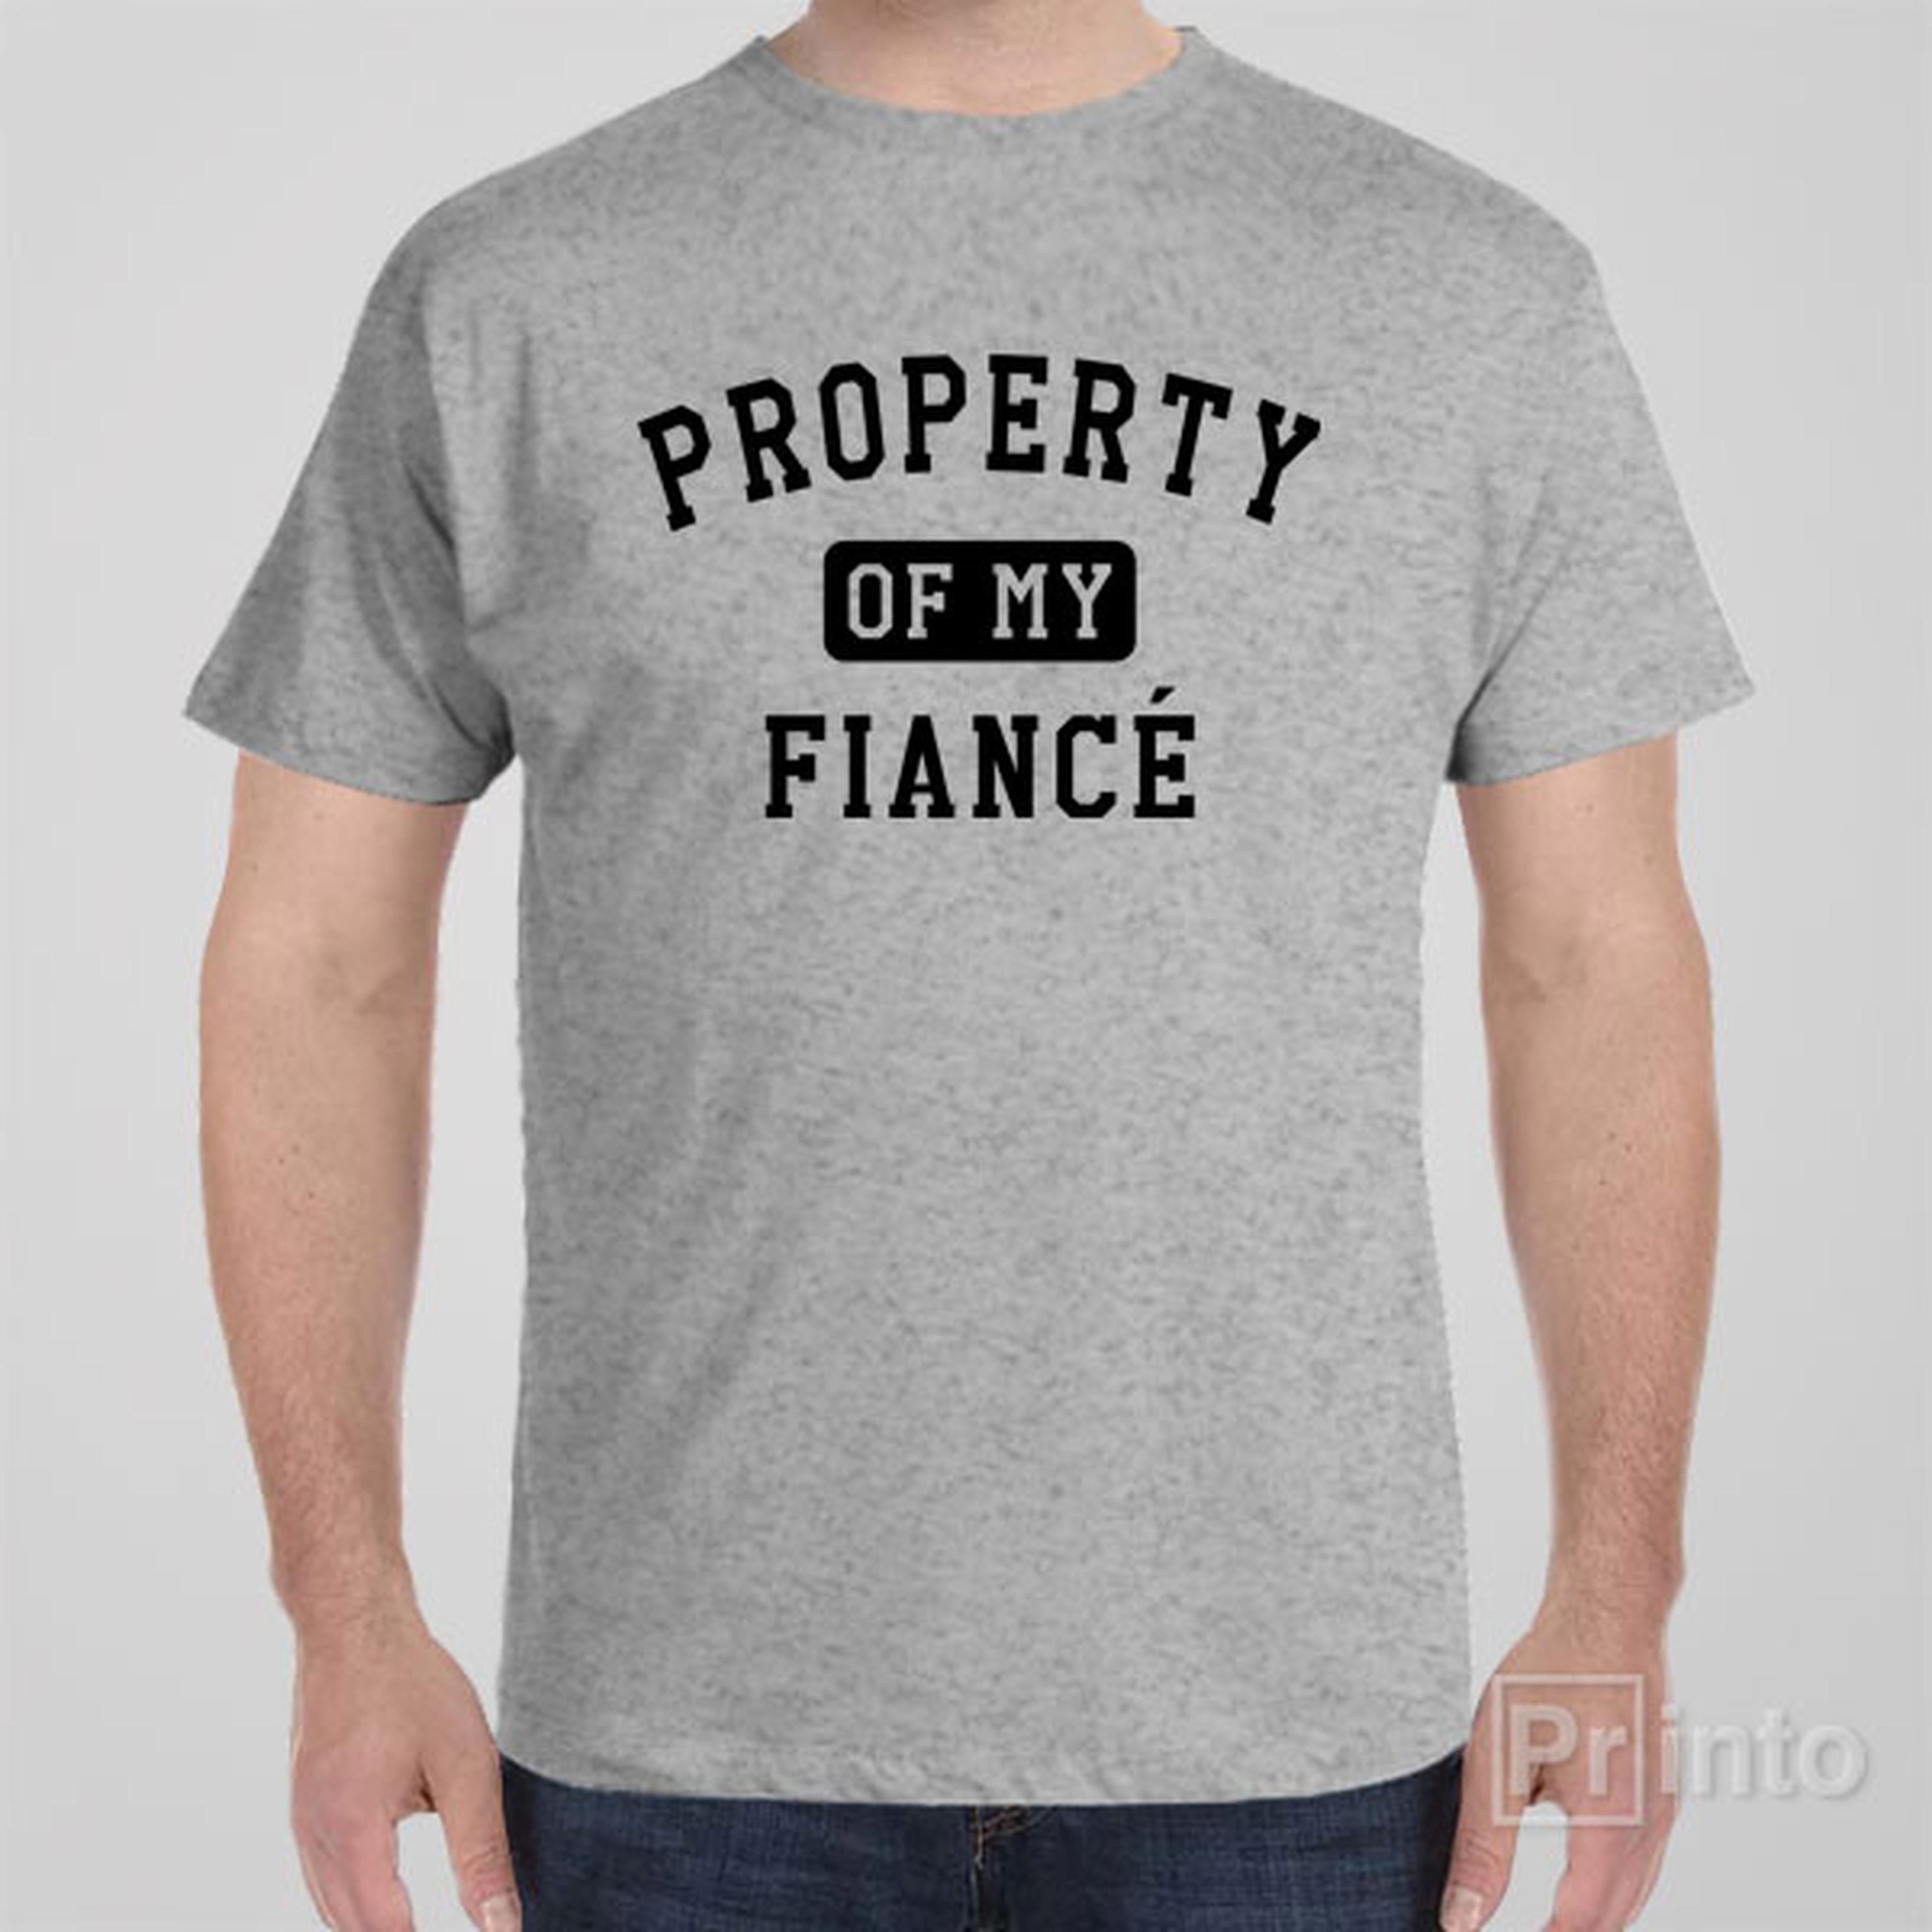 property-of-my-fiance-t-shirt